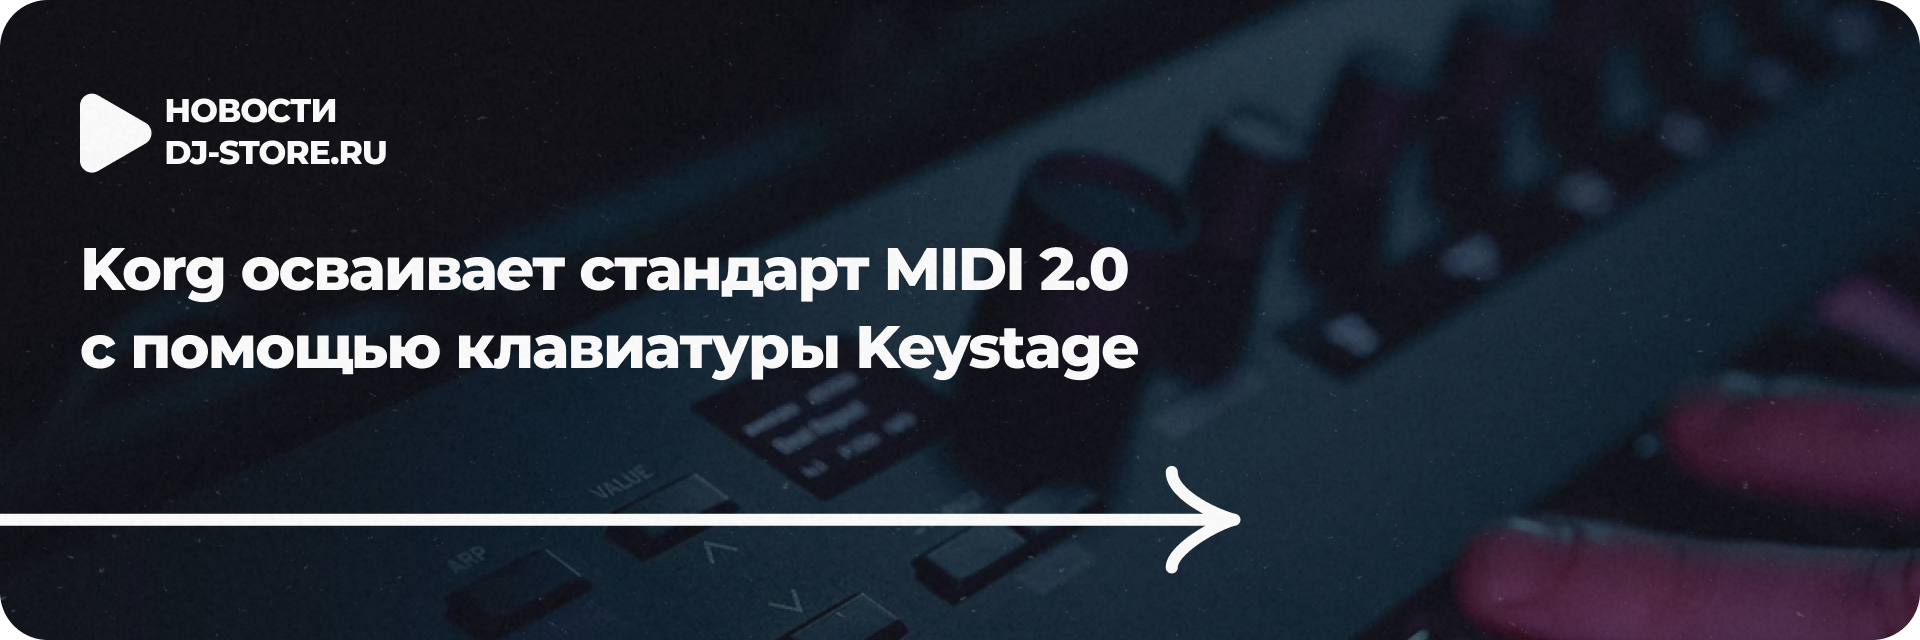 Стандарт MIDI 2.0 в клавиатуре Keystage